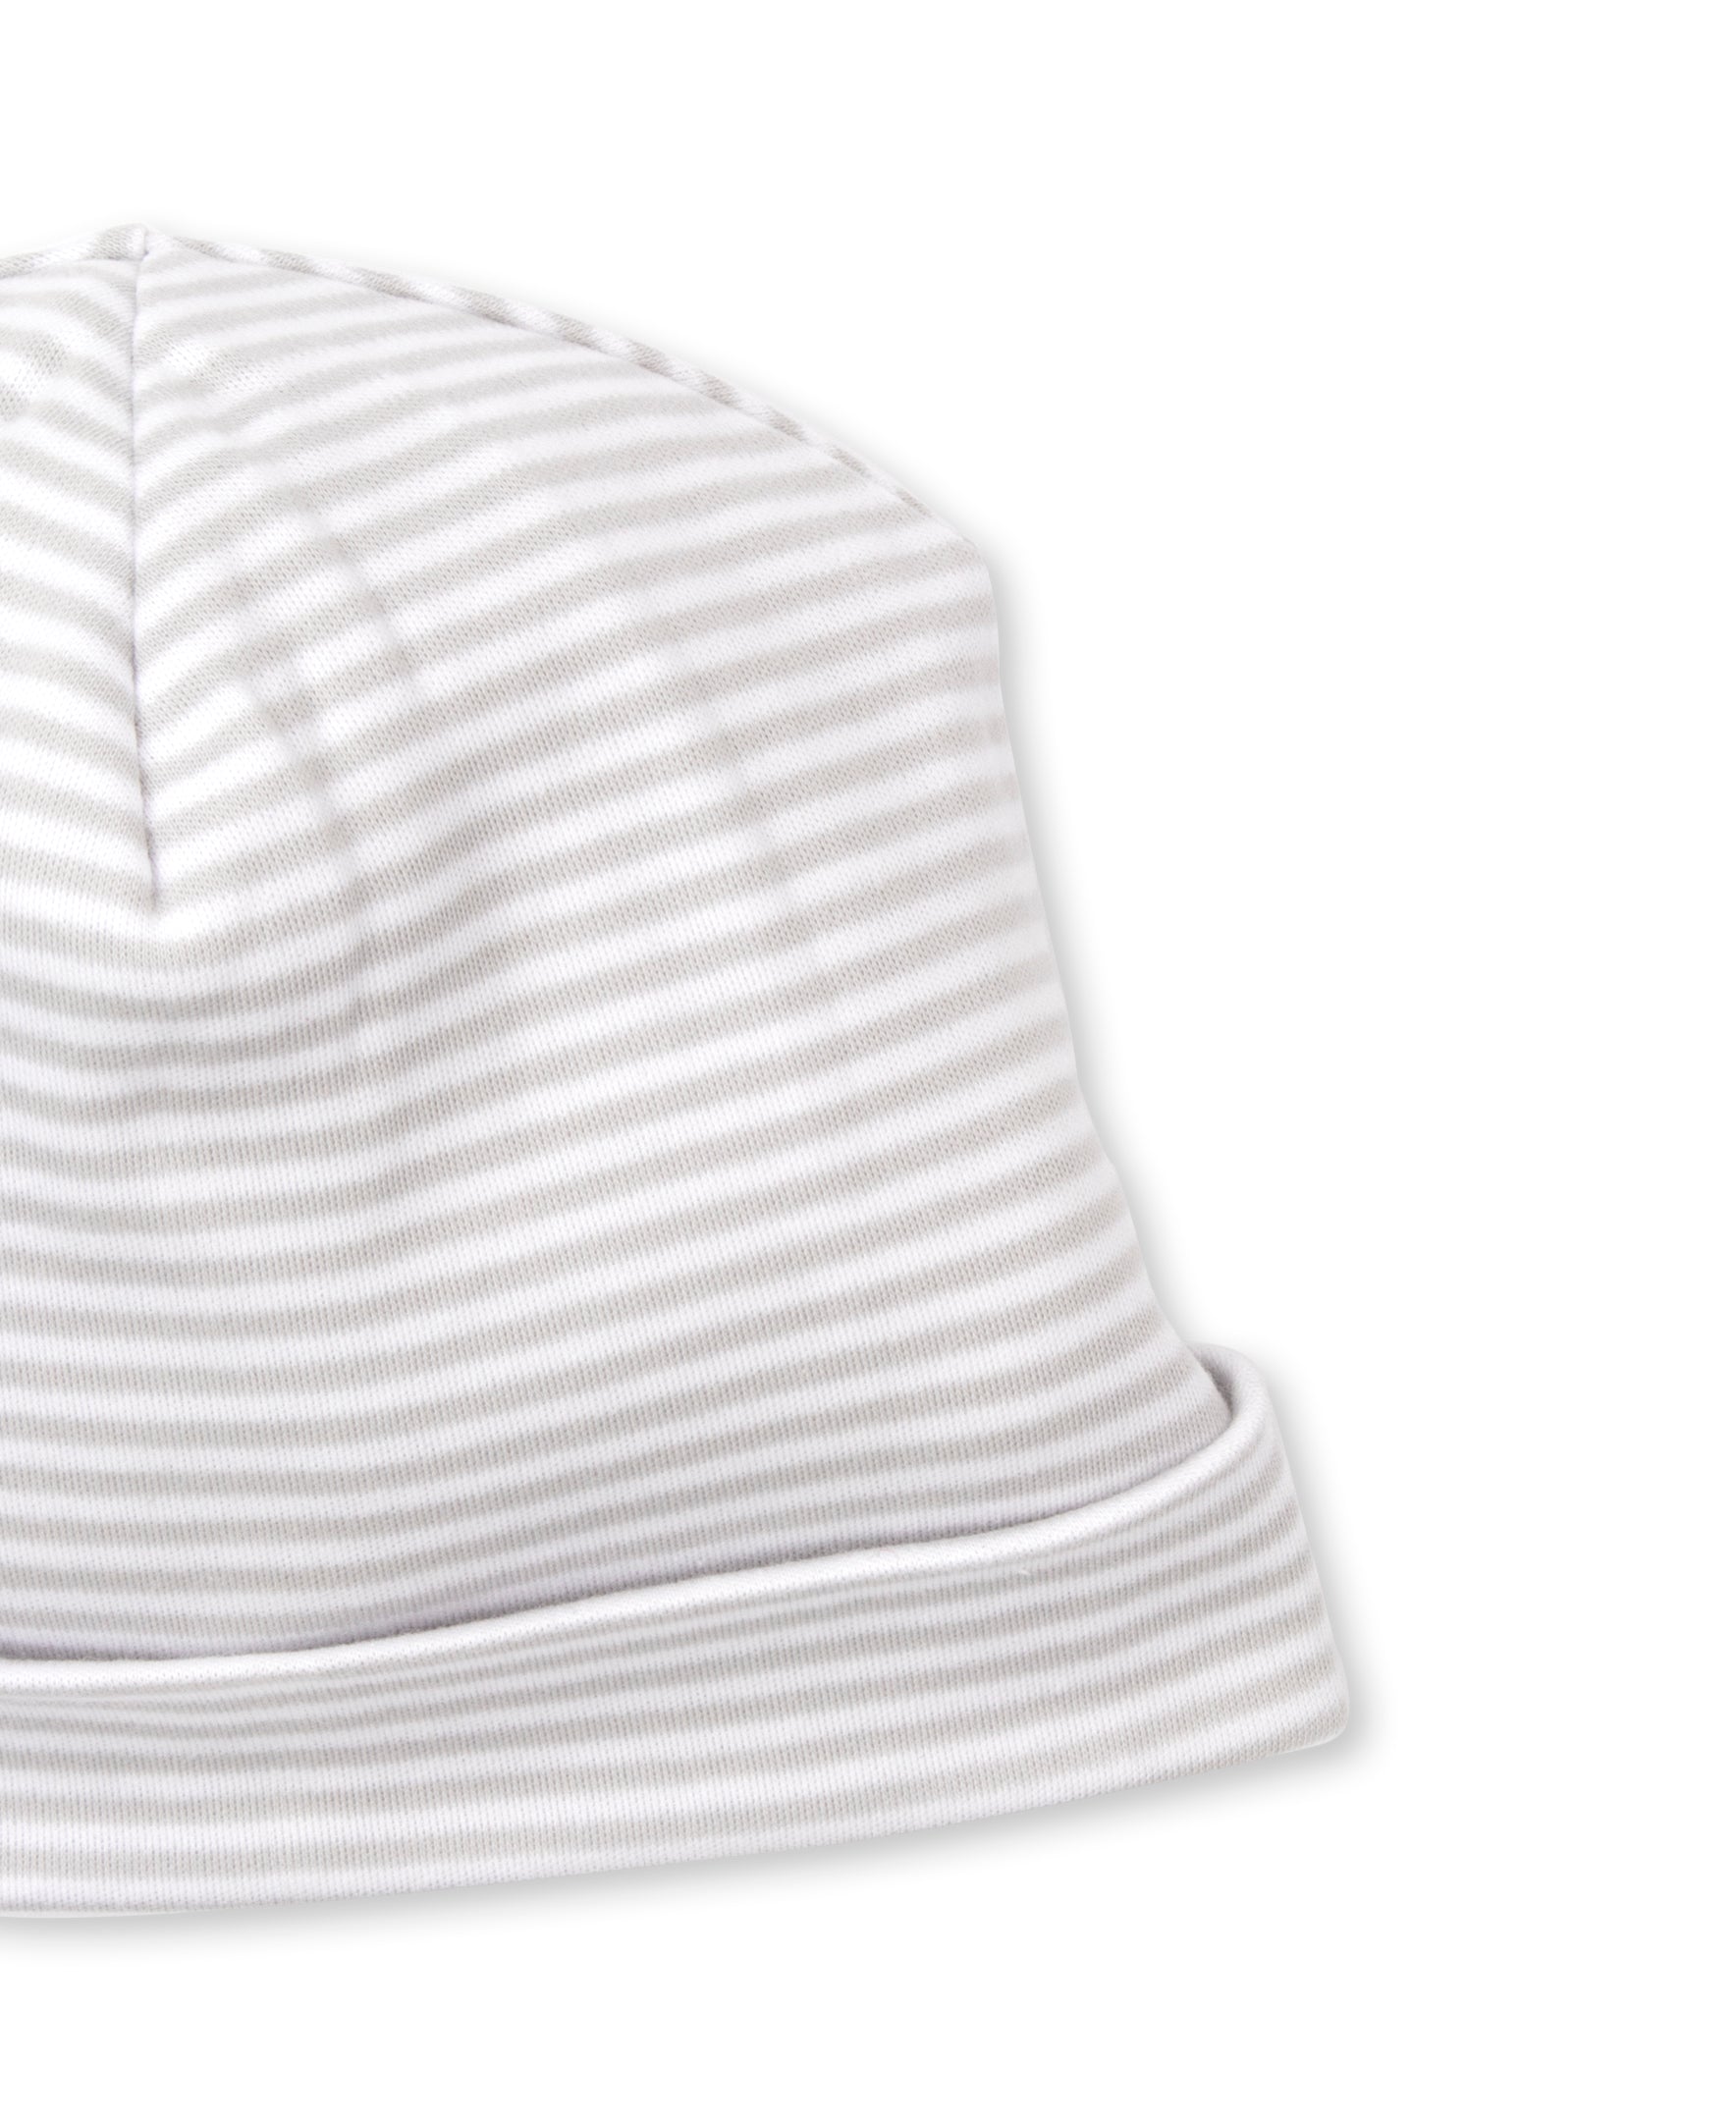 Simple Stripes Silver Hat - Kissy Kissy